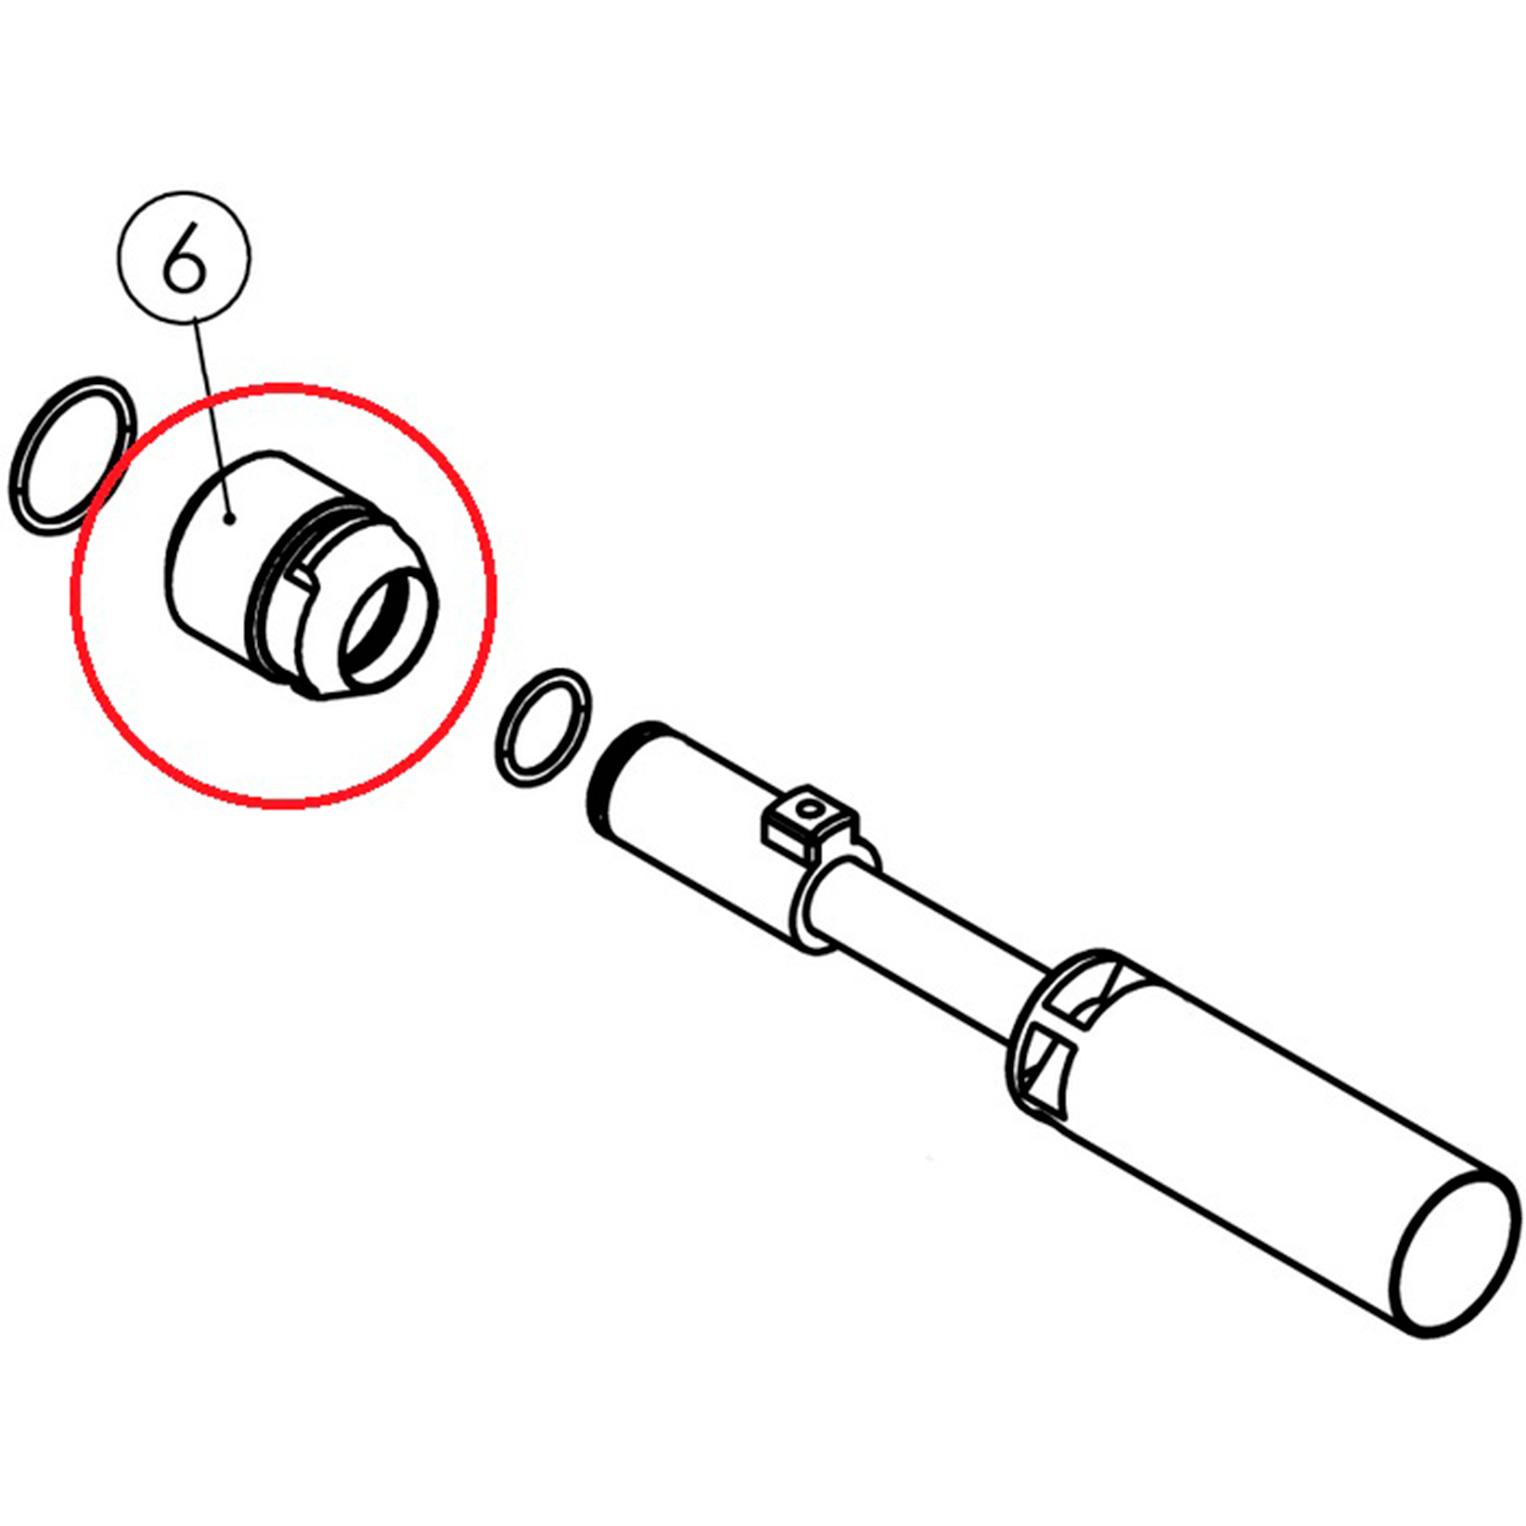 SW-1 Part #06 Barrel Thread Adapter